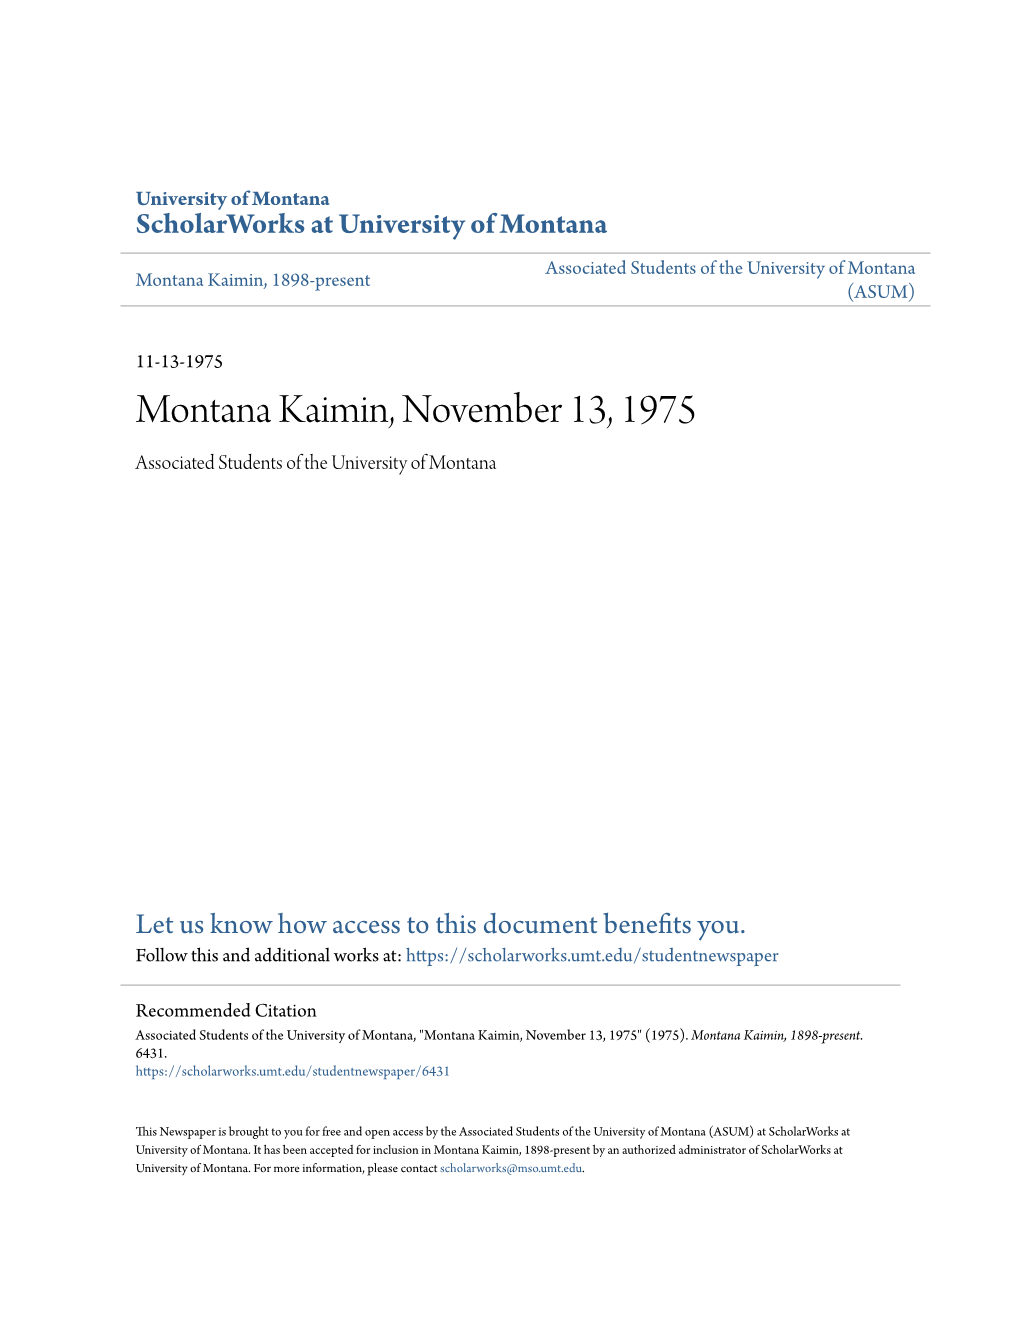 Montana Kaimin, November 13, 1975 Associated Students of the University of Montana